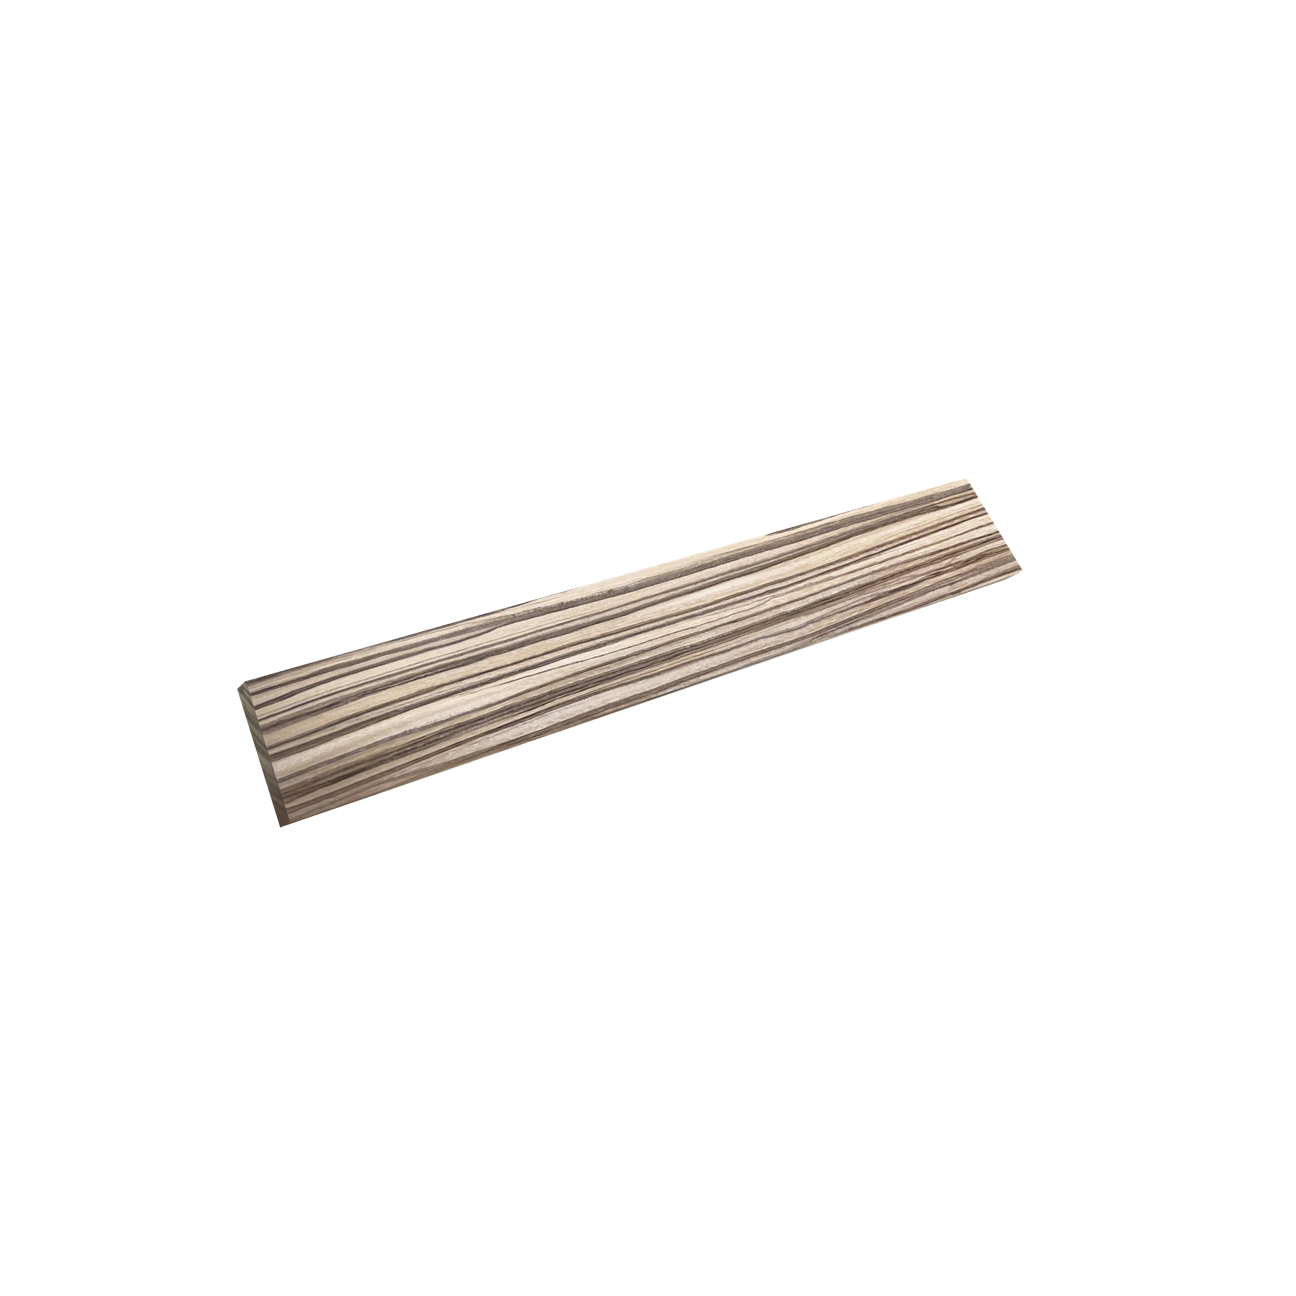 Zebrawood - Dimensional Lumber